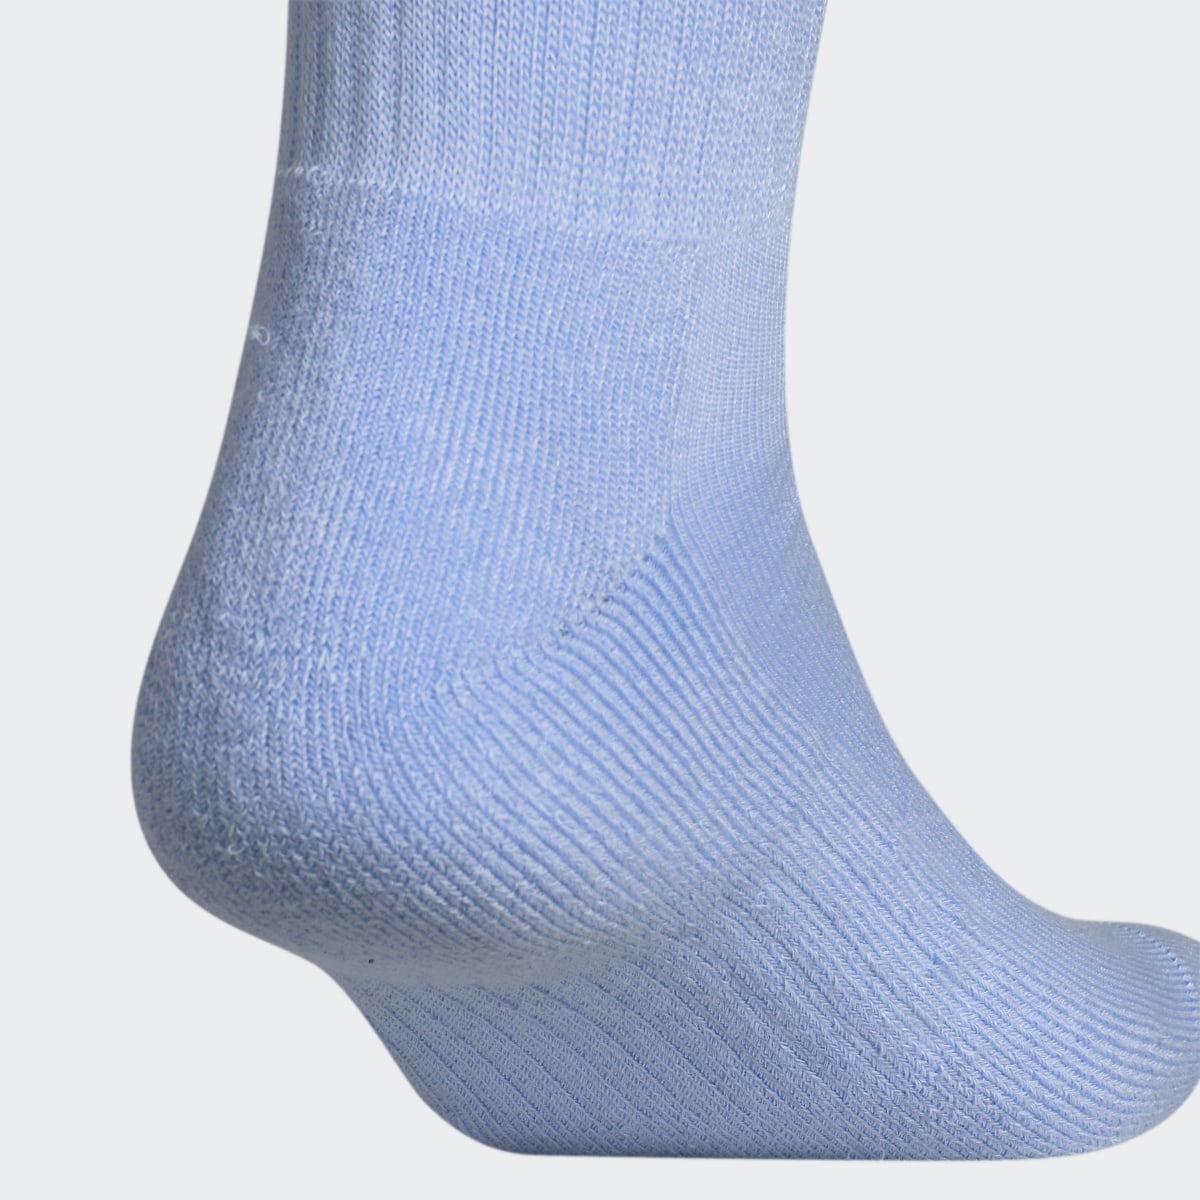 Adidas Cushioned Mixed Crew Socks 6 Pairs. 5